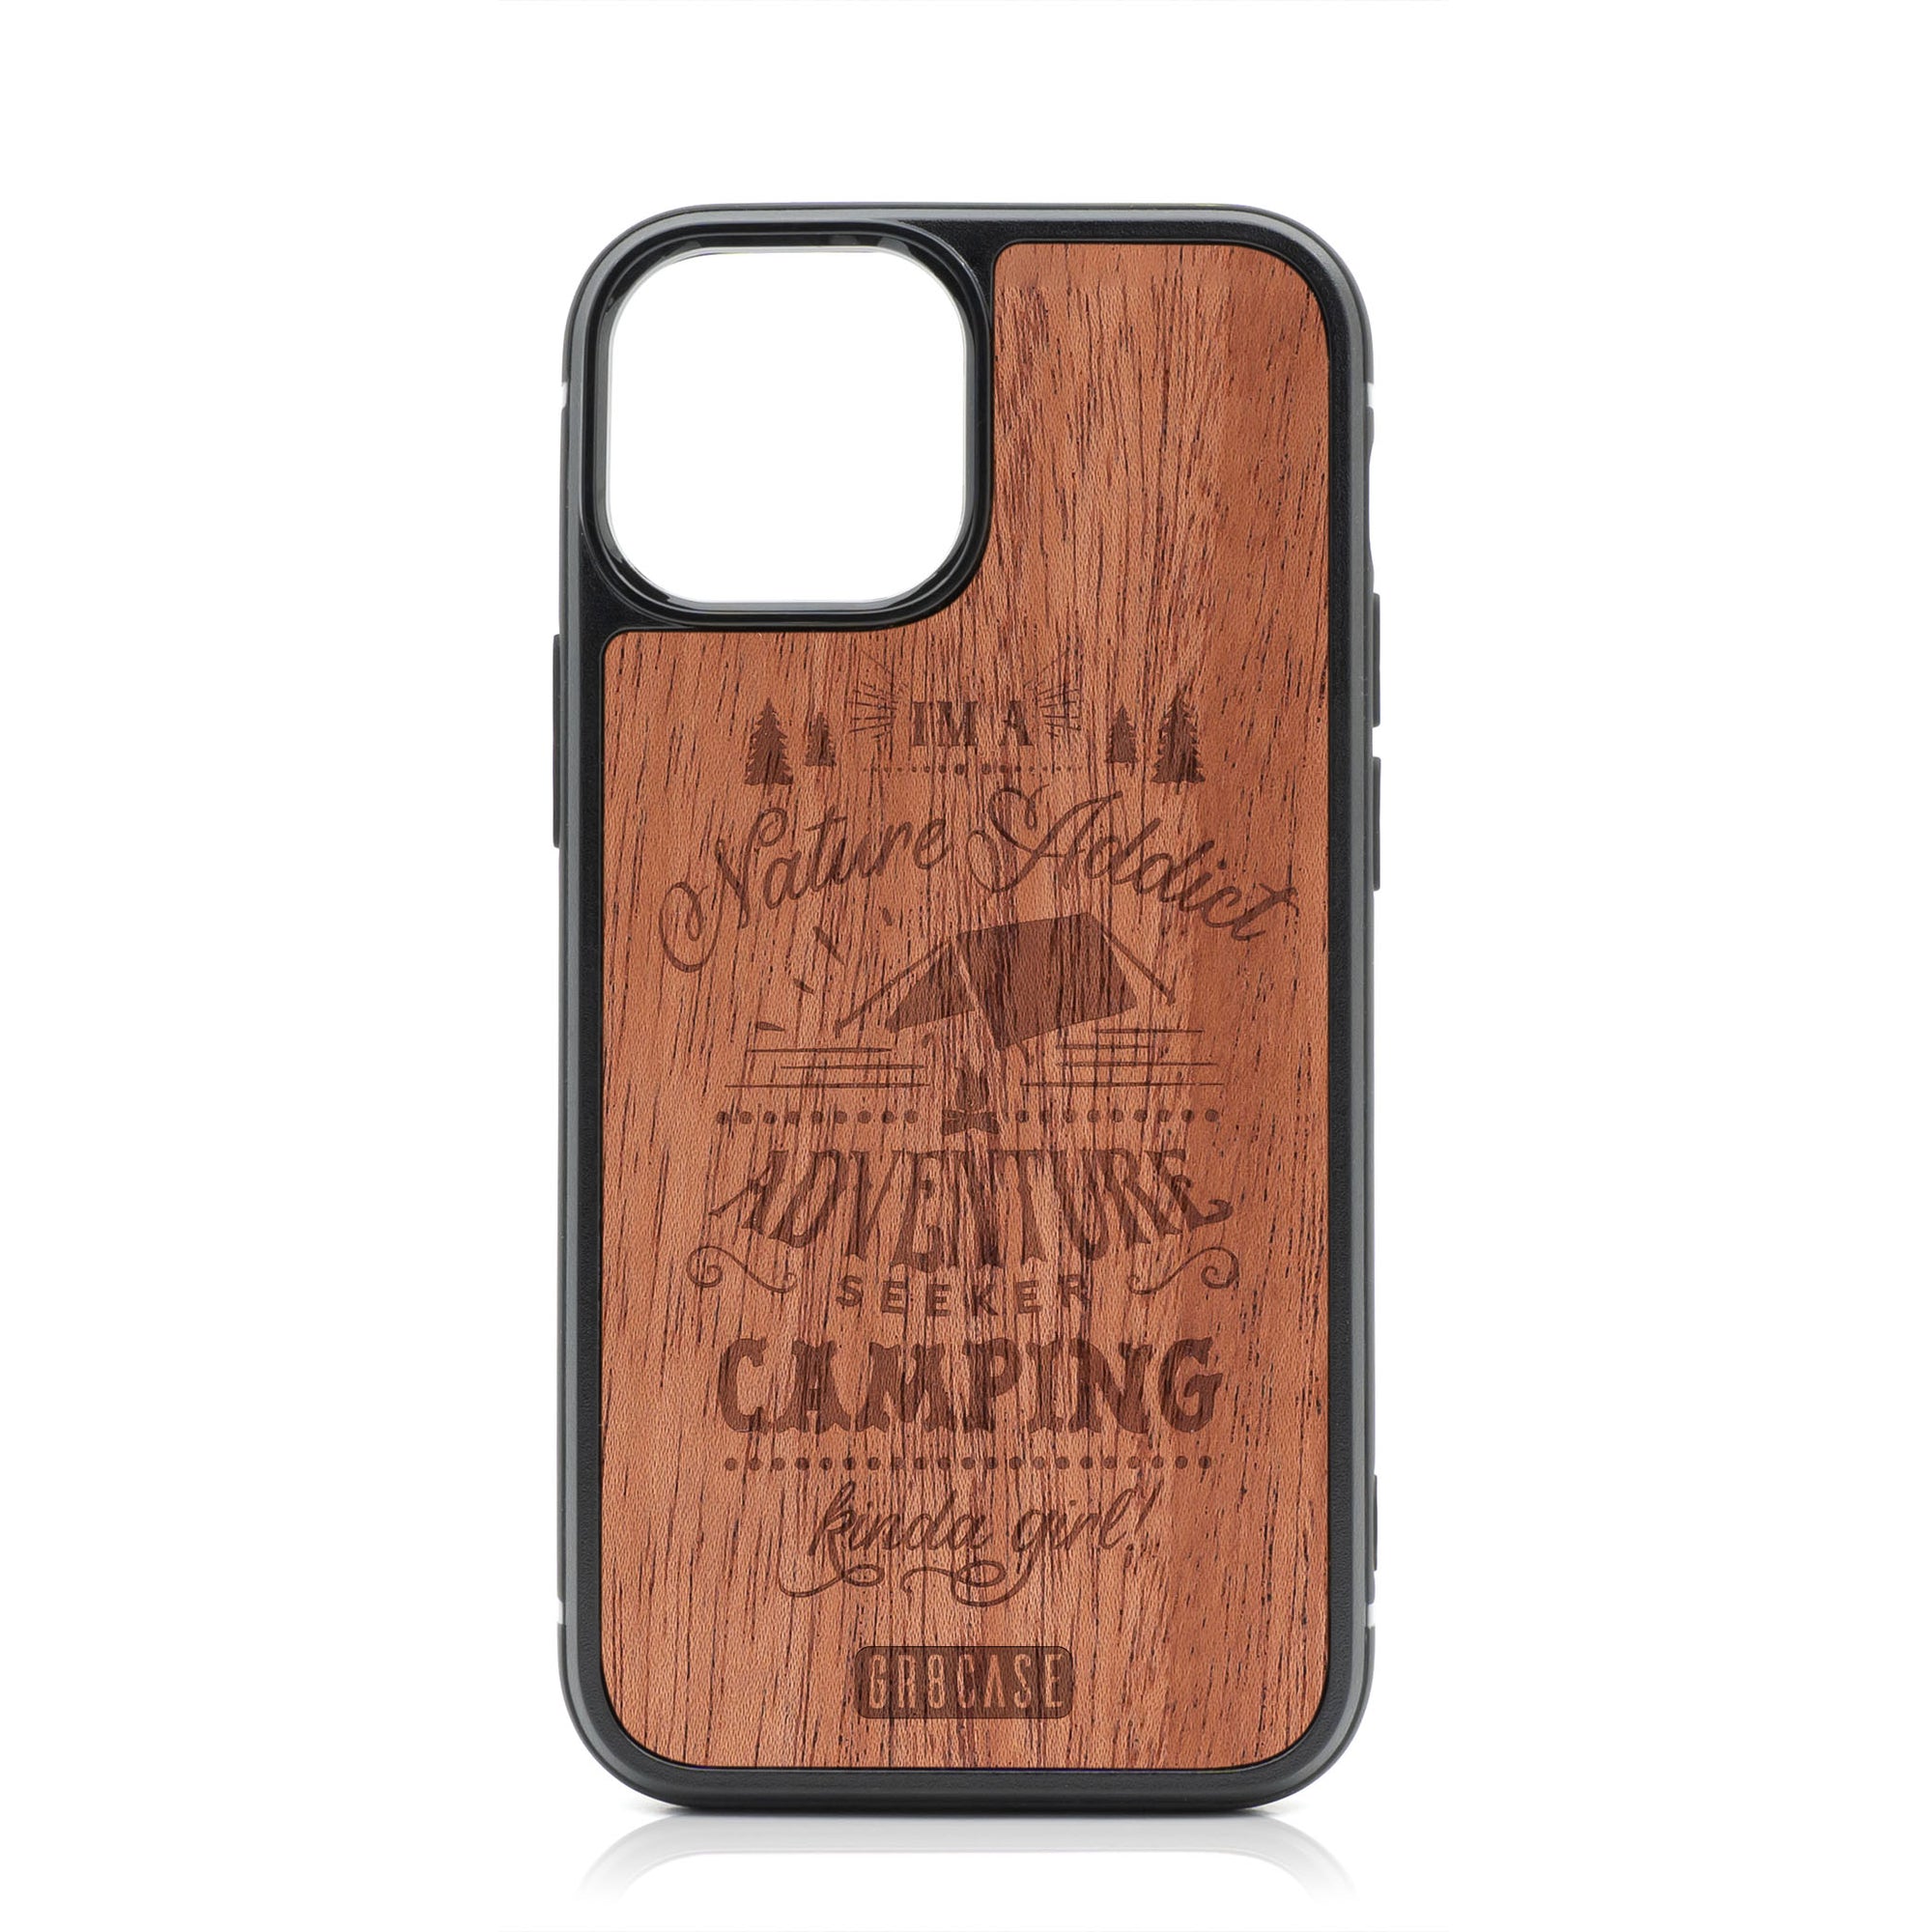 I'm A Nature Addict Adventure Seeker Camping Kinda Girl Design Wood Case For iPhone 13 Mini